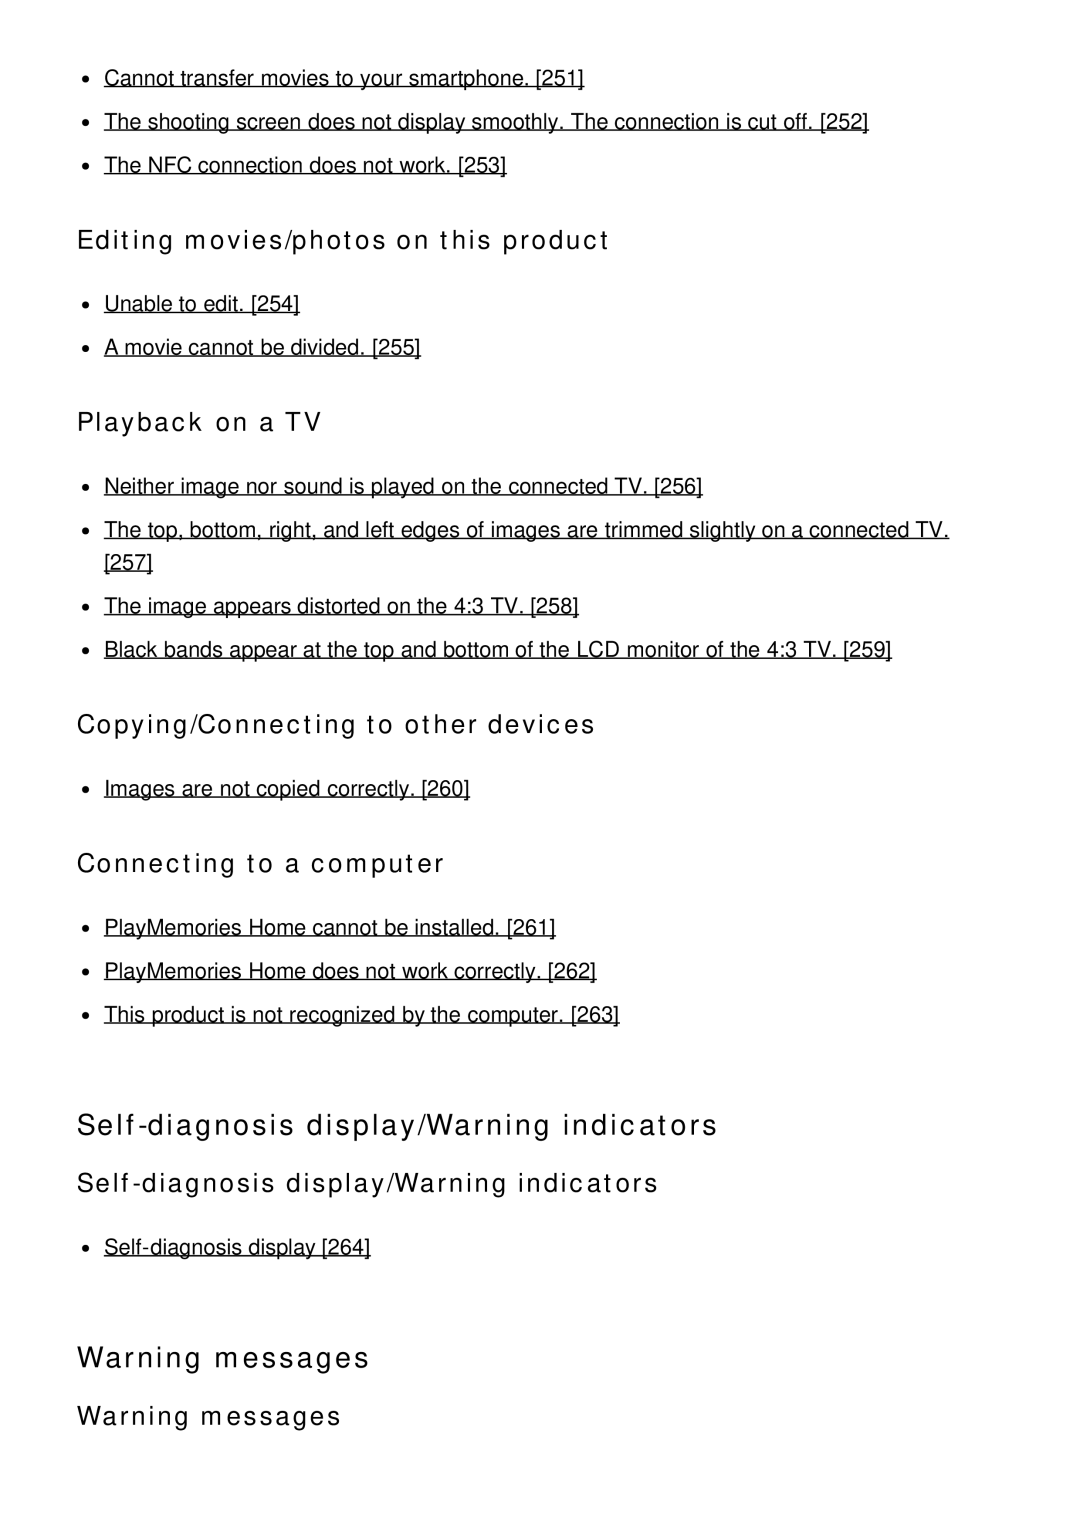 Sony FDR-AX100 manual Self-diagnosis display/Warning indicators, Warning messages, Editing movies/photos on this product 